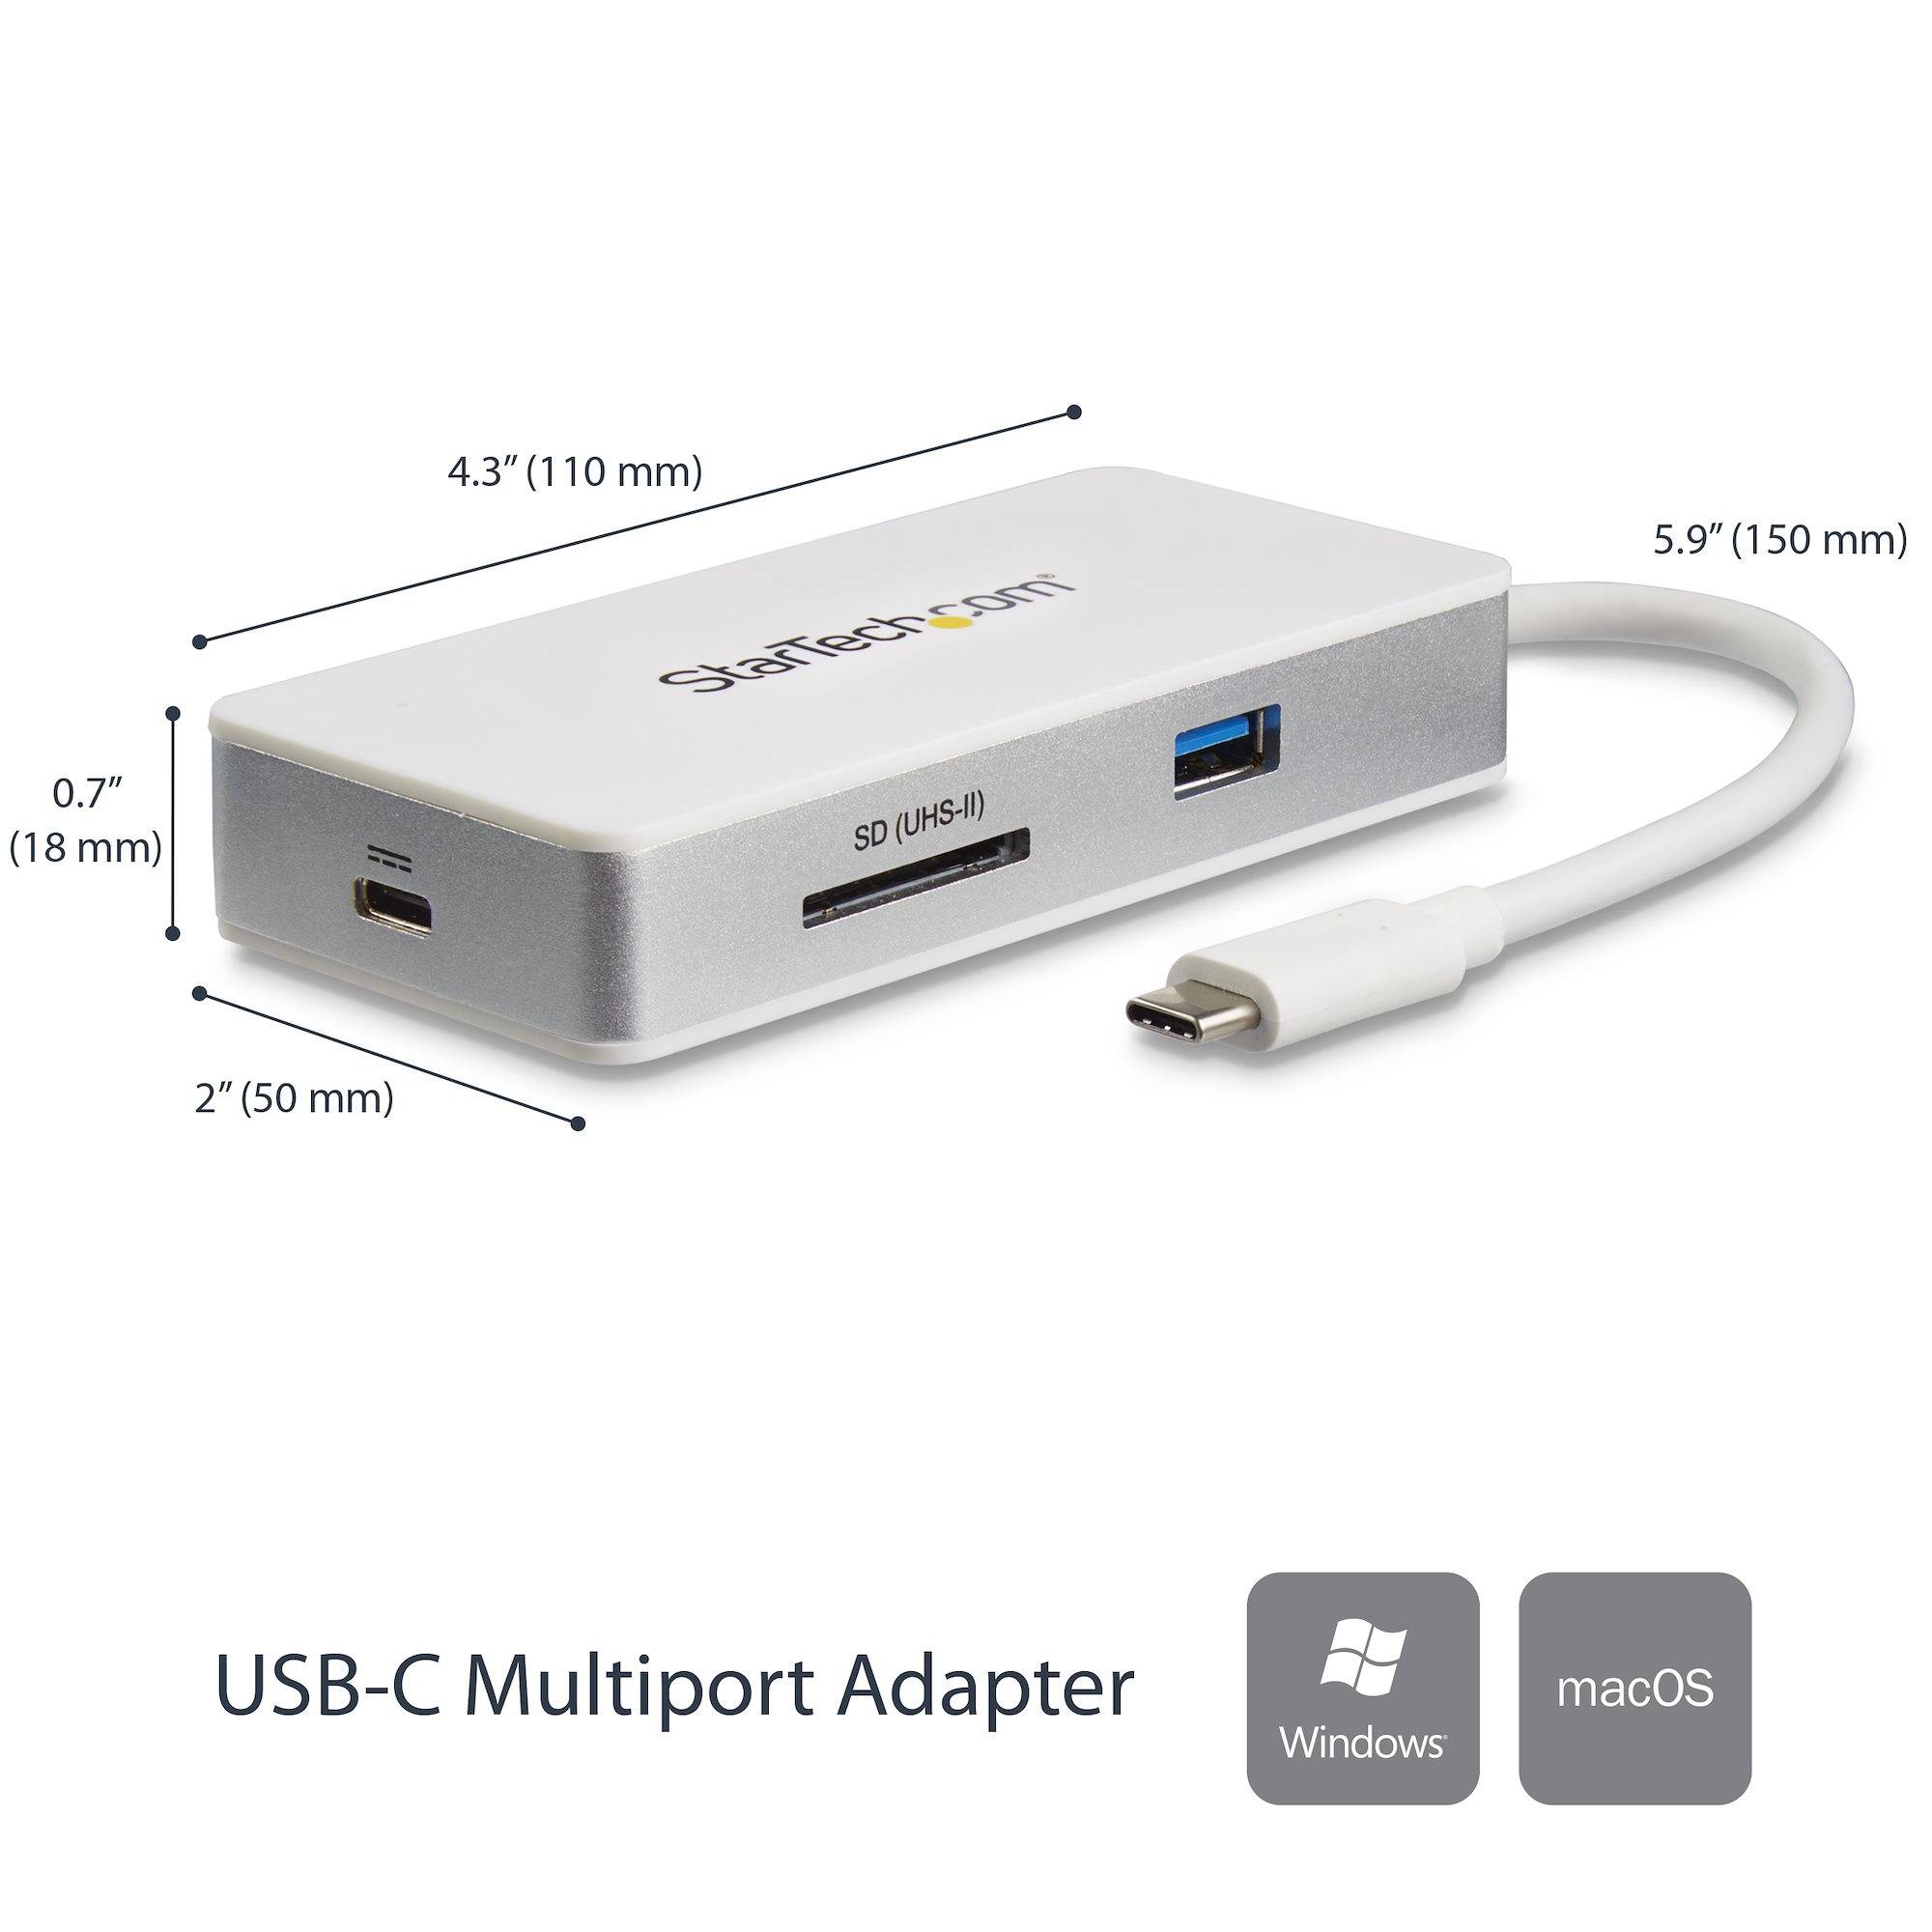 Rca Informatique - image du produit : USB C MULTIPORT ADAPTER - MAC WINDOWS 4K HDMI USB 3.0 SD SLOT